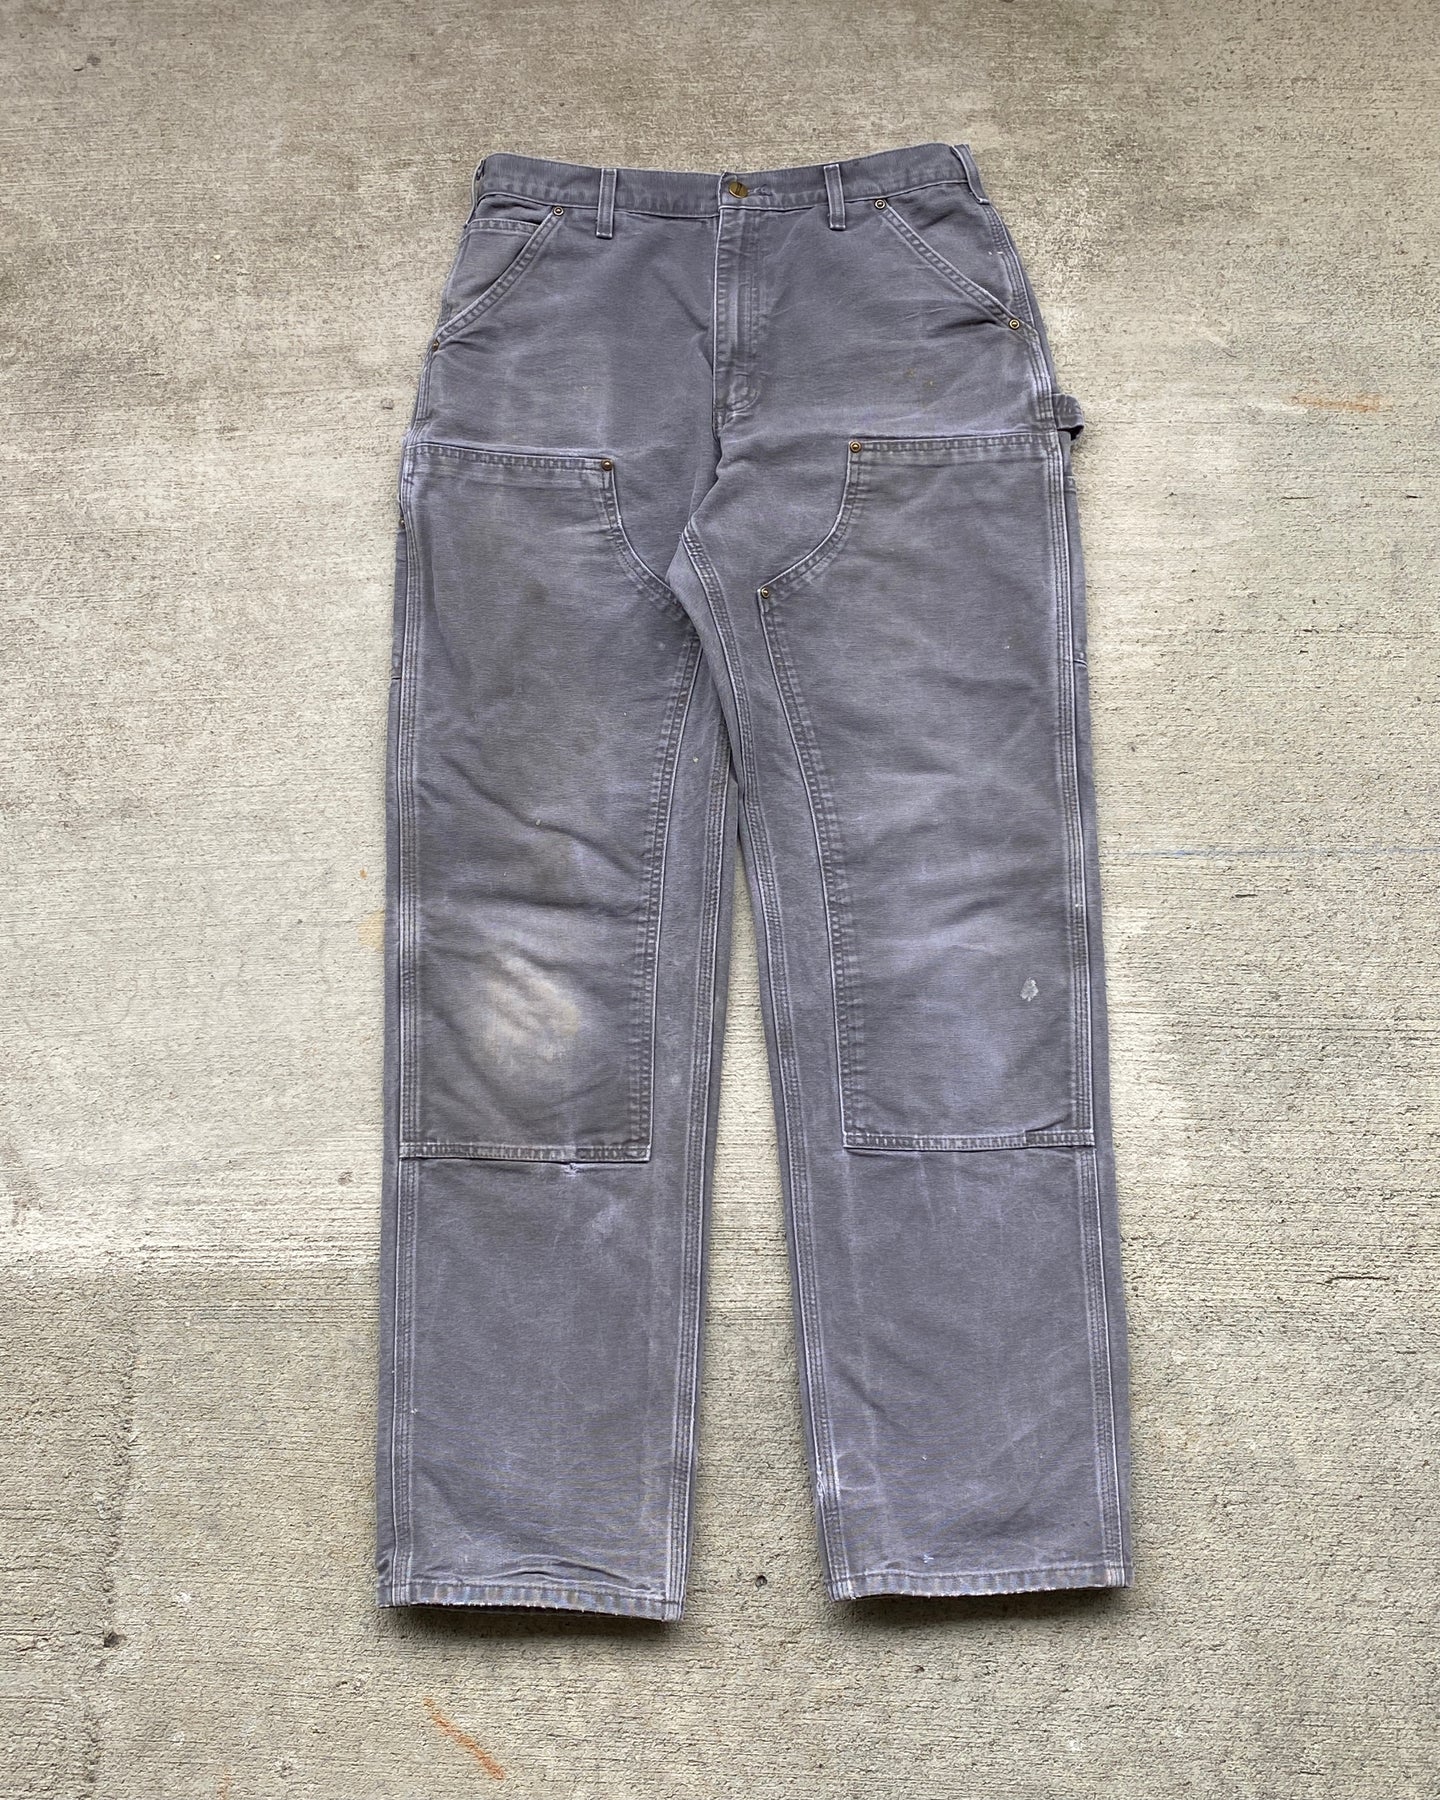 Carhartt Double Knee Carpenter Pants - Size 32 x 34